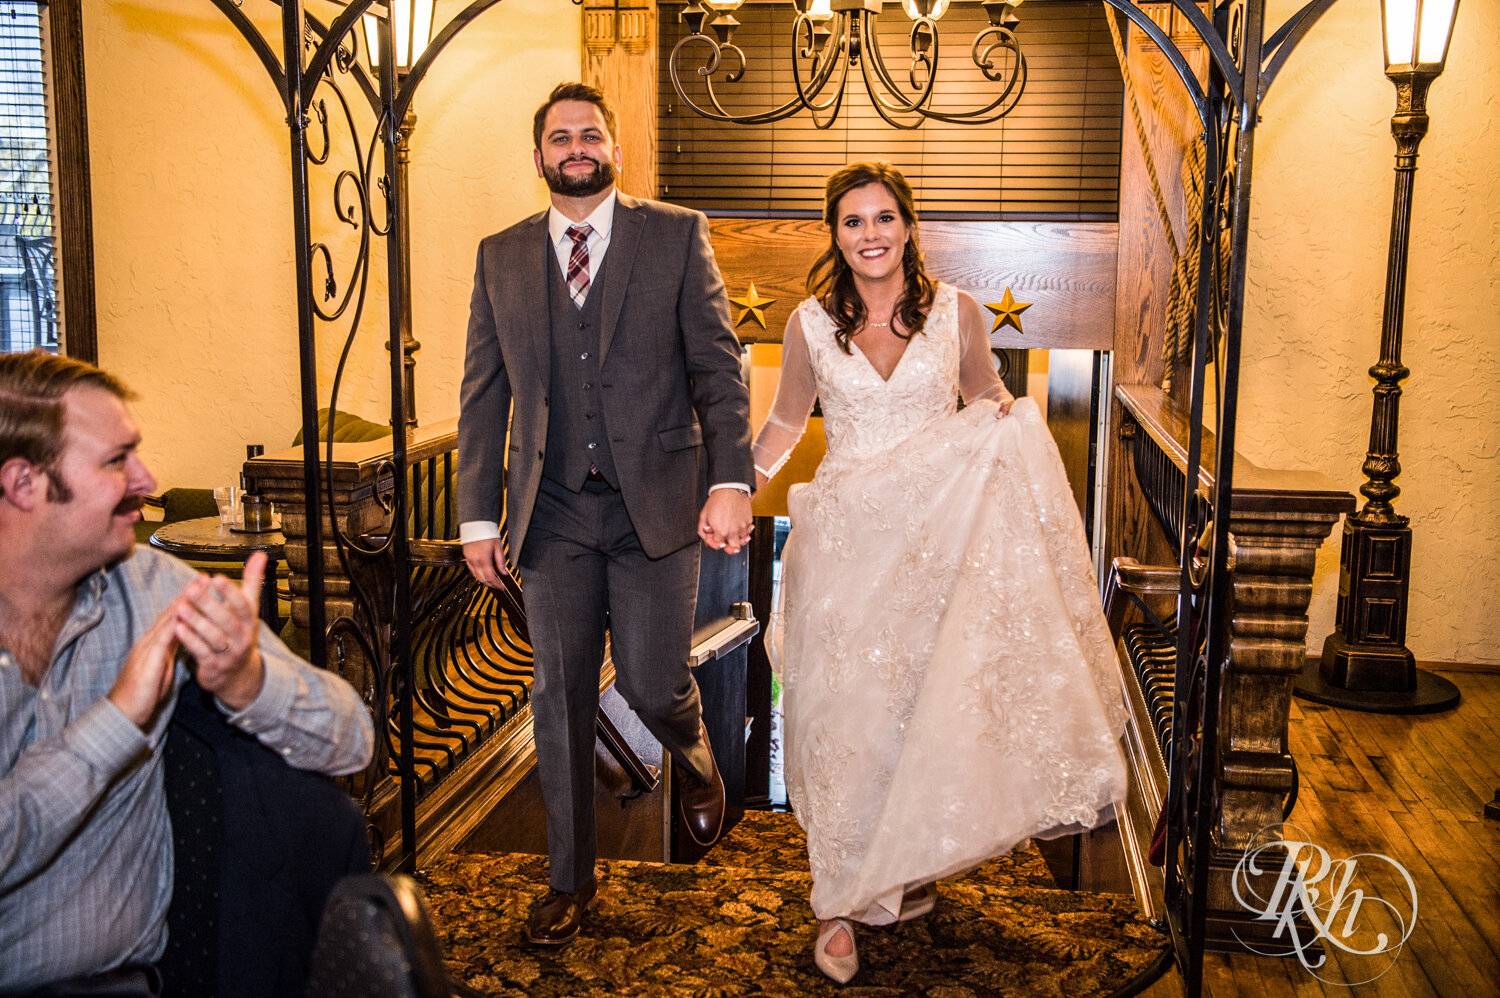 Bride and groom smile entering wedding reception at Kellerman's Event Center in White Bear Lake, Minnesota.